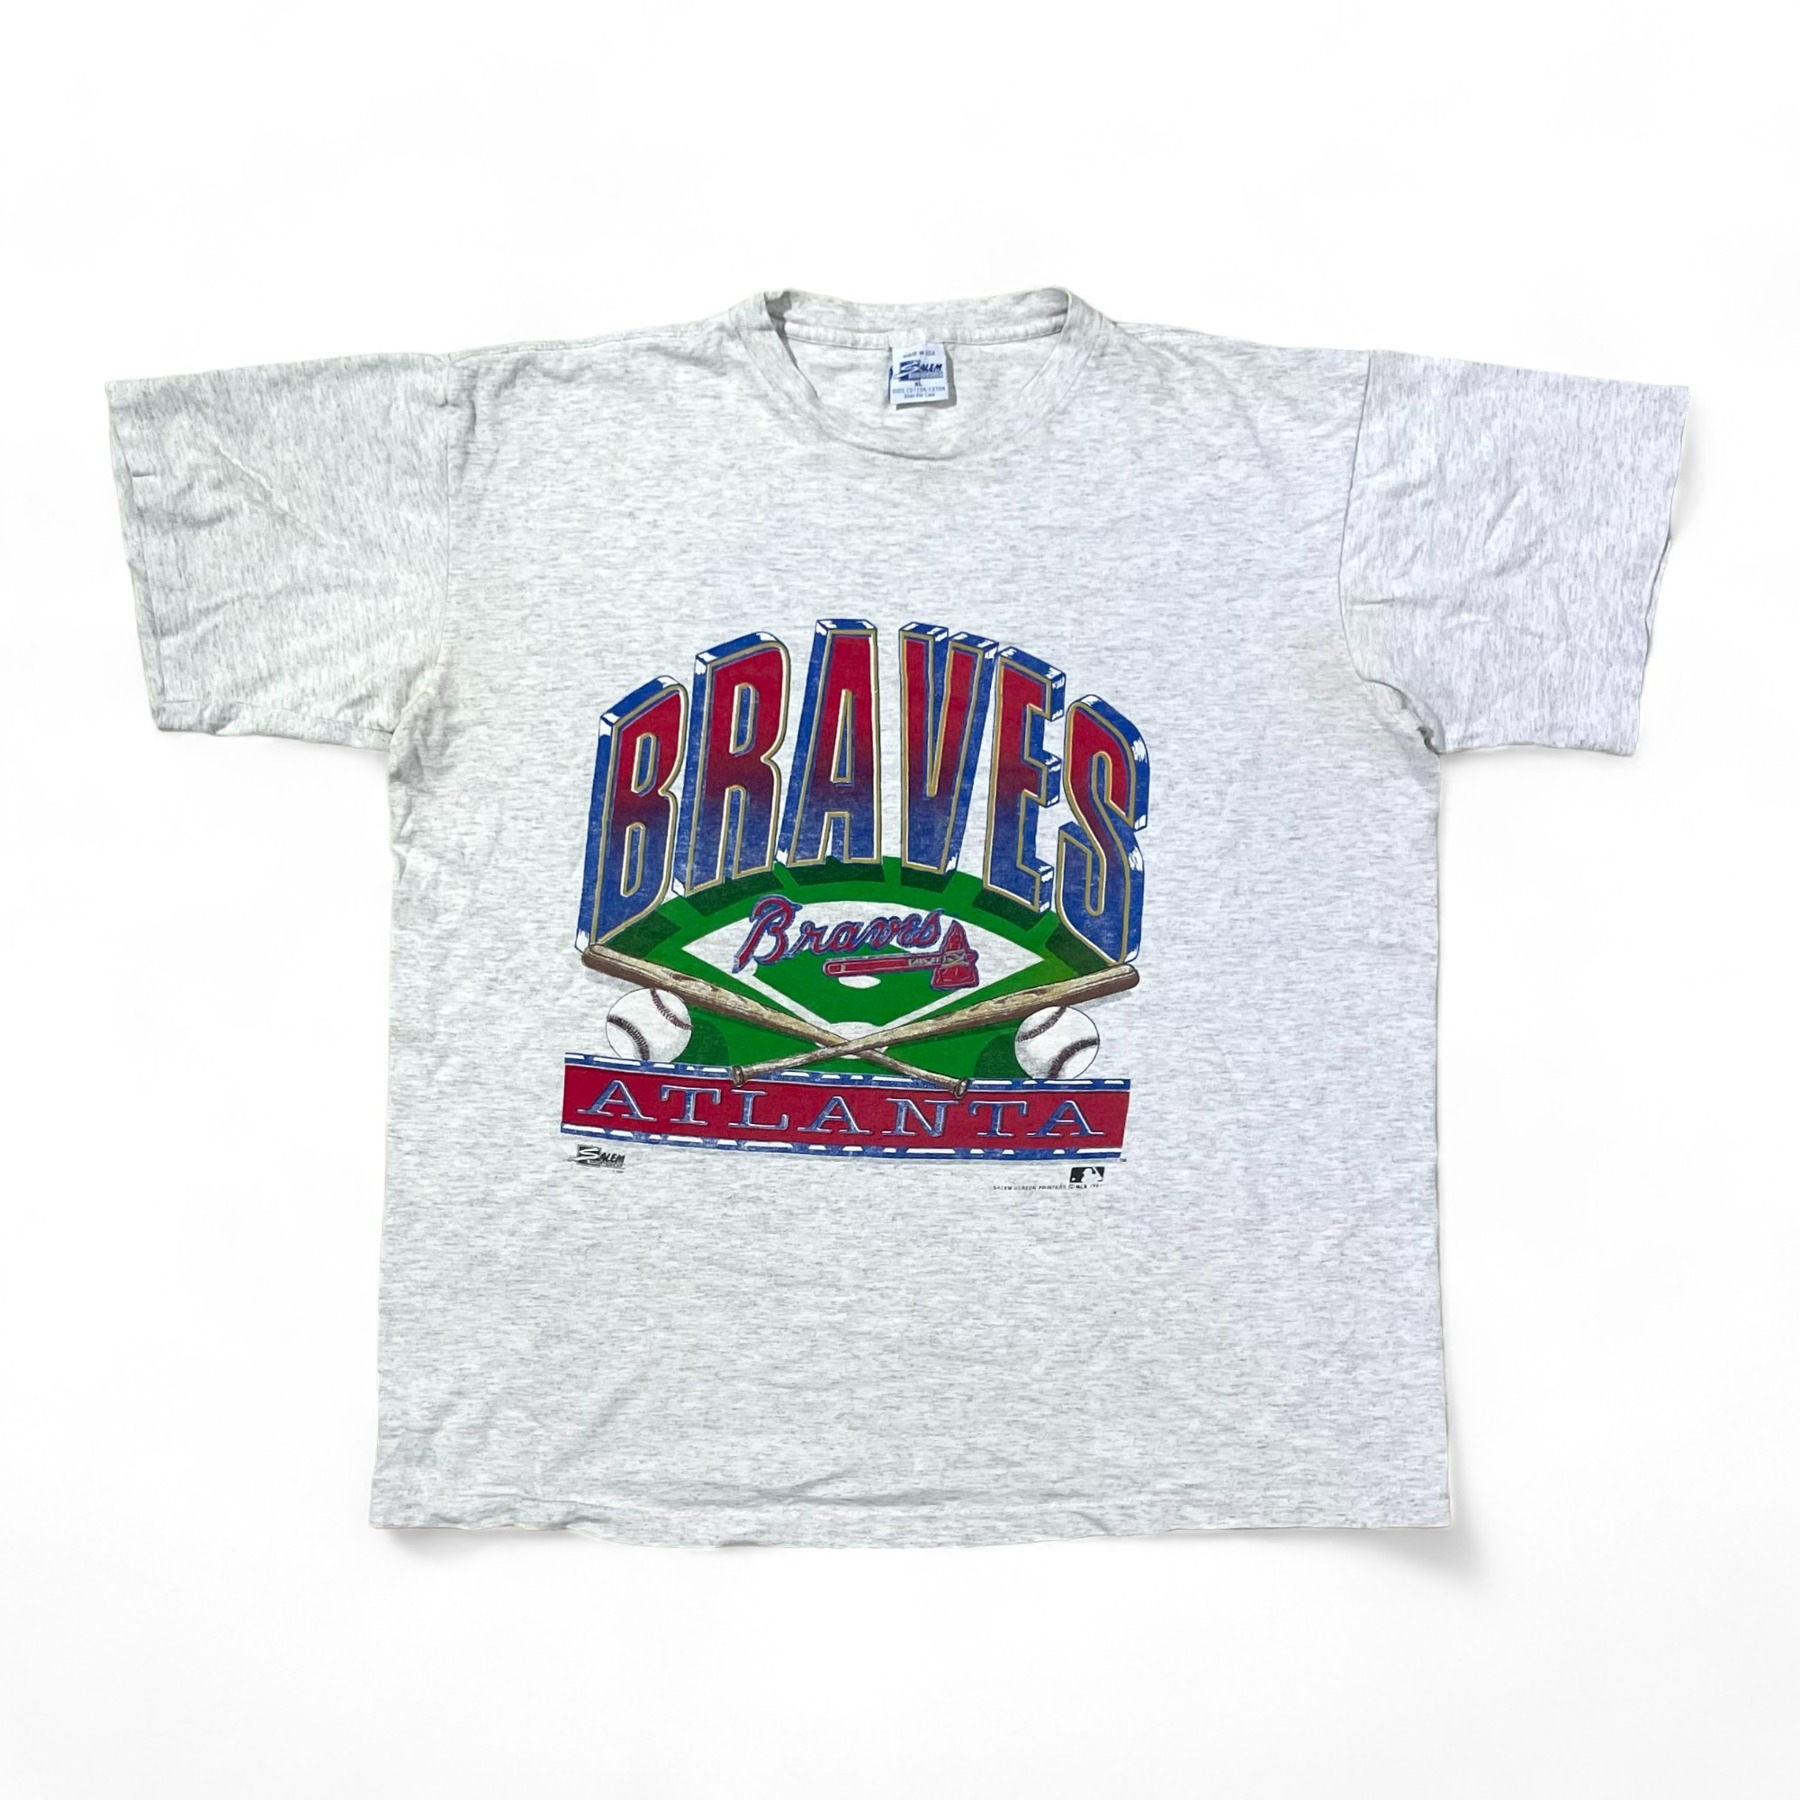 1991 Atlanta Braves Tee (Made in USA) - XL